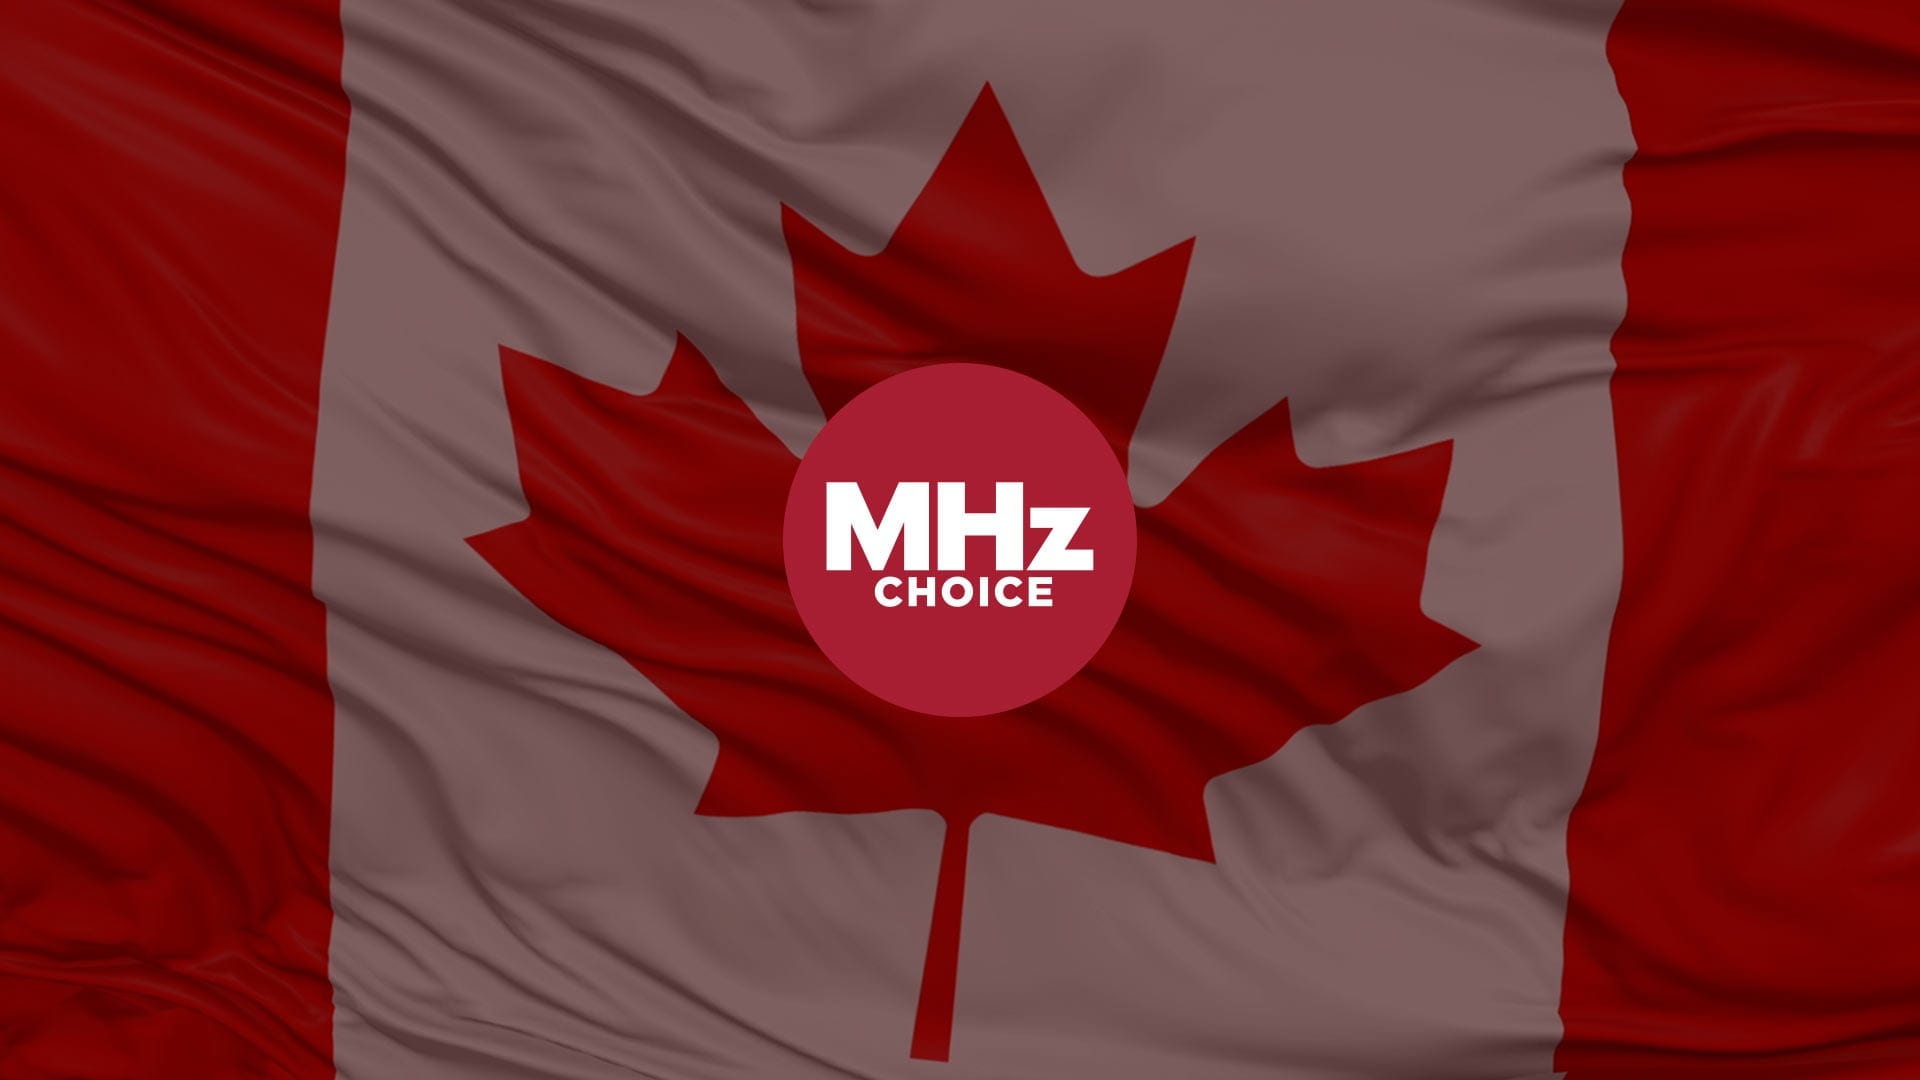 mhz choice canadaian flag promo 2 1920x1080